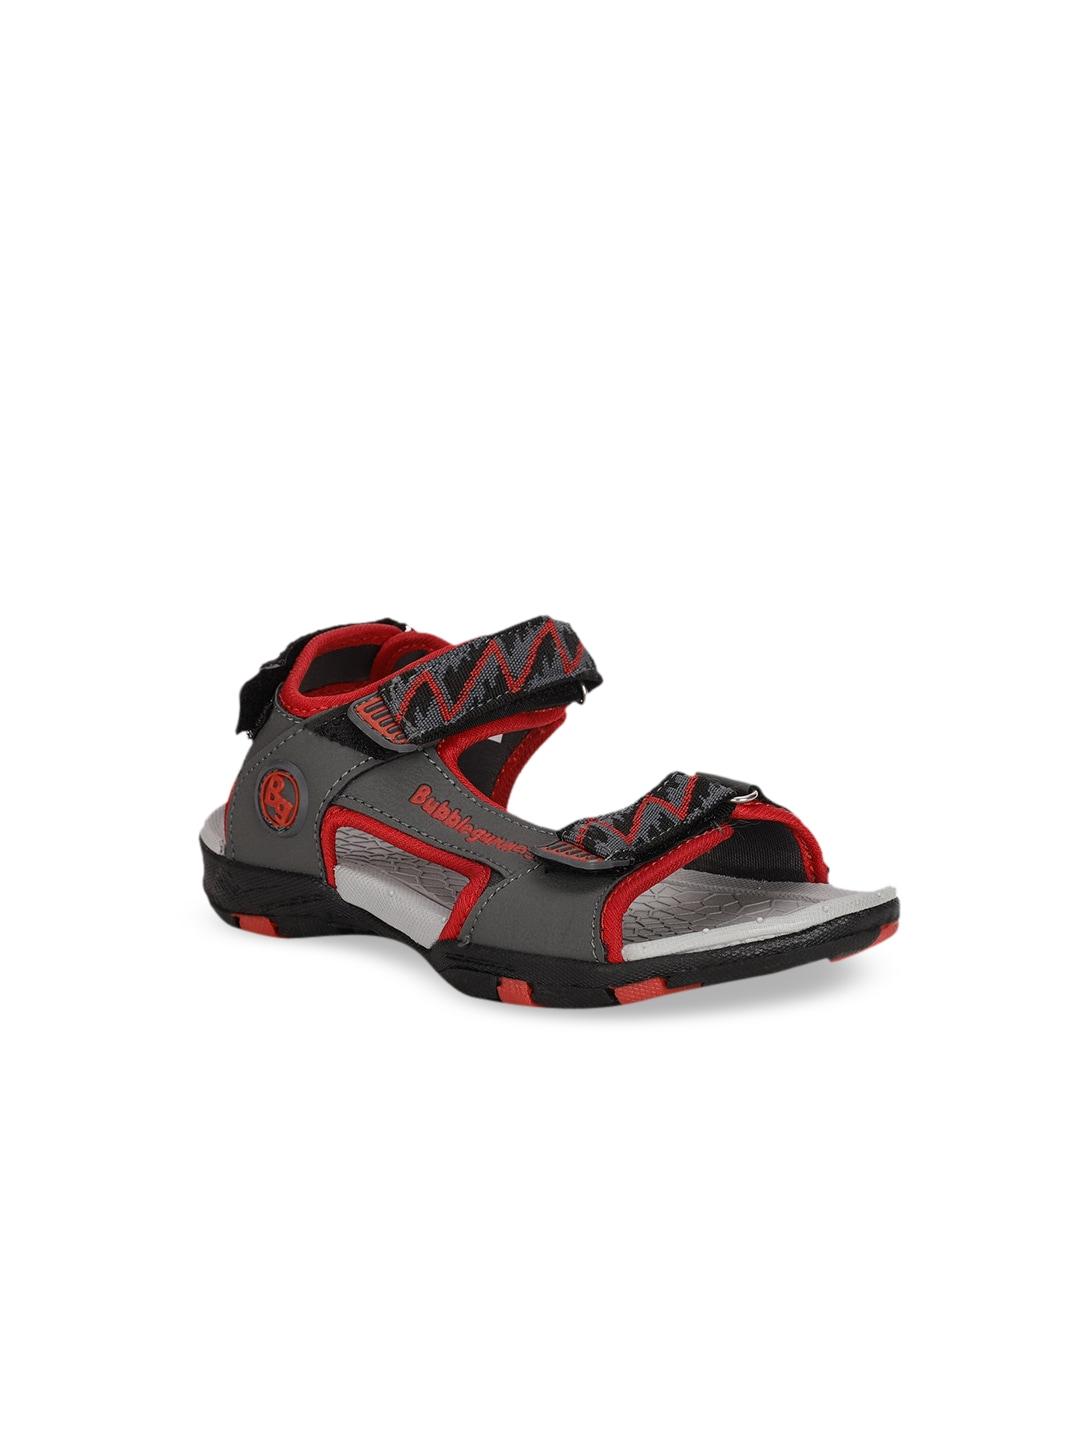 bubblegummers boys red & grey sports sandals